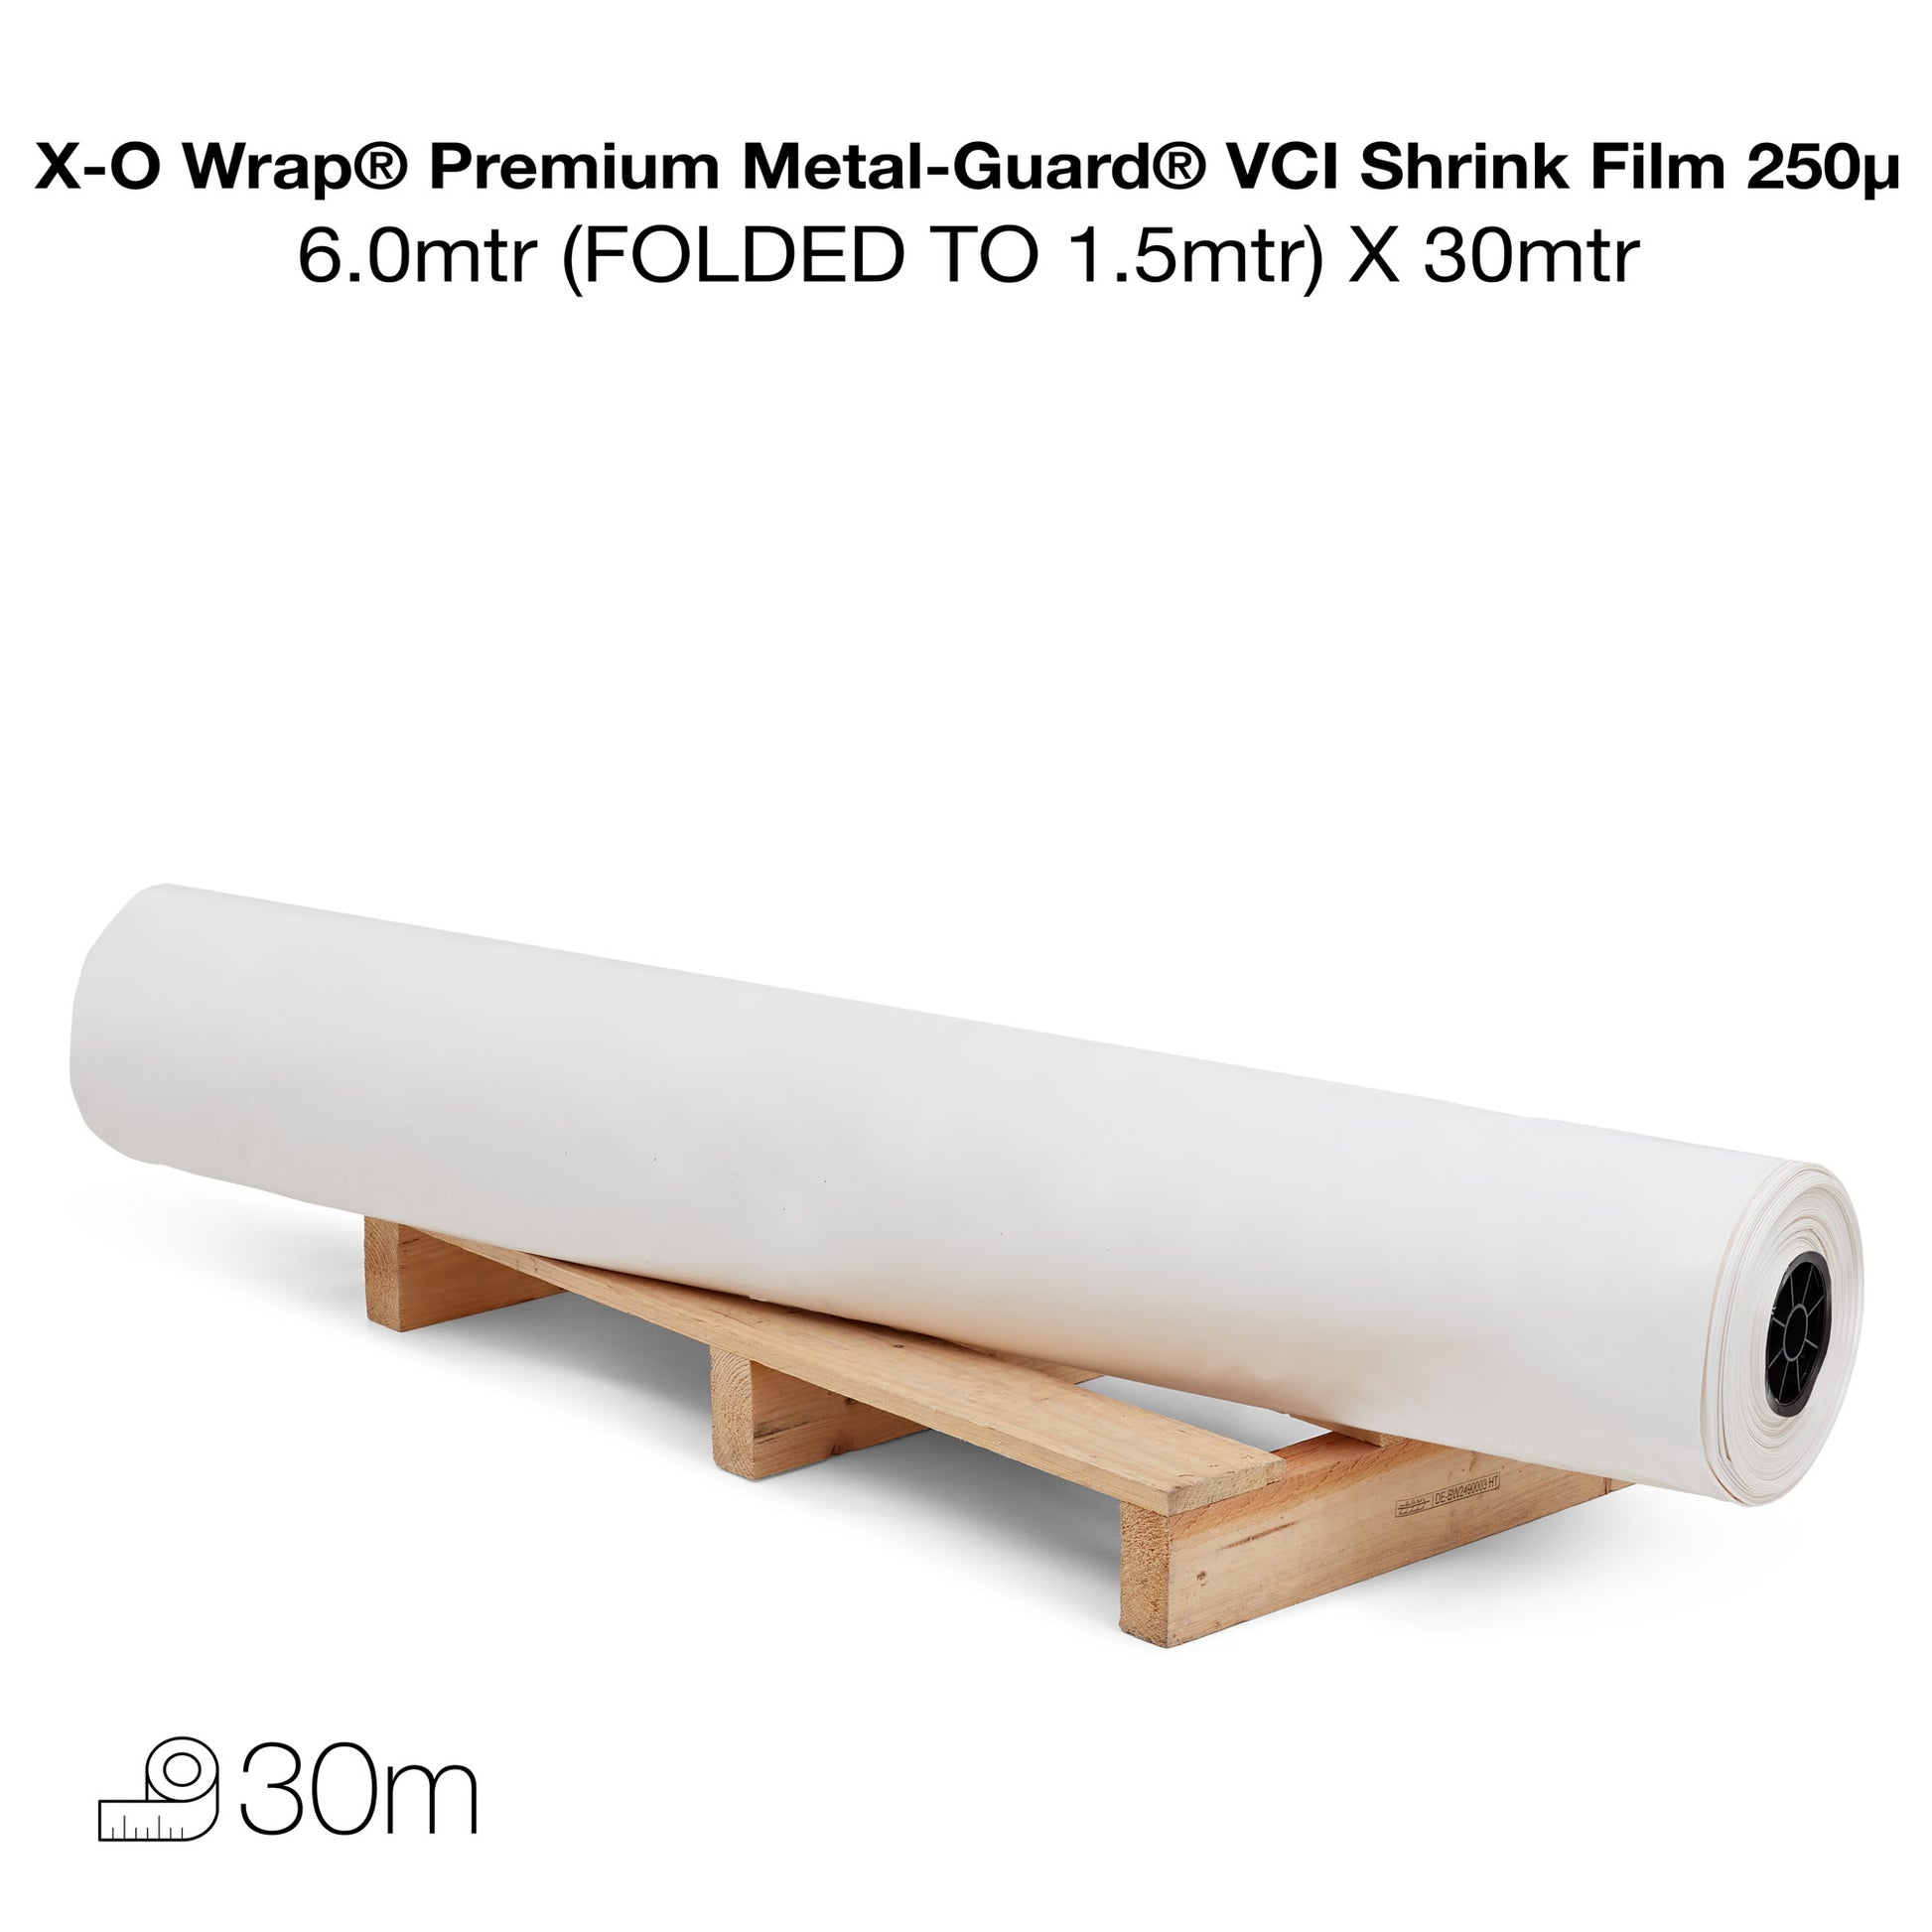 Daubert Cromwell X-O Wrap® Premium Metal-Guard® VCI Shrink Wrap Valdamarkdirect.com